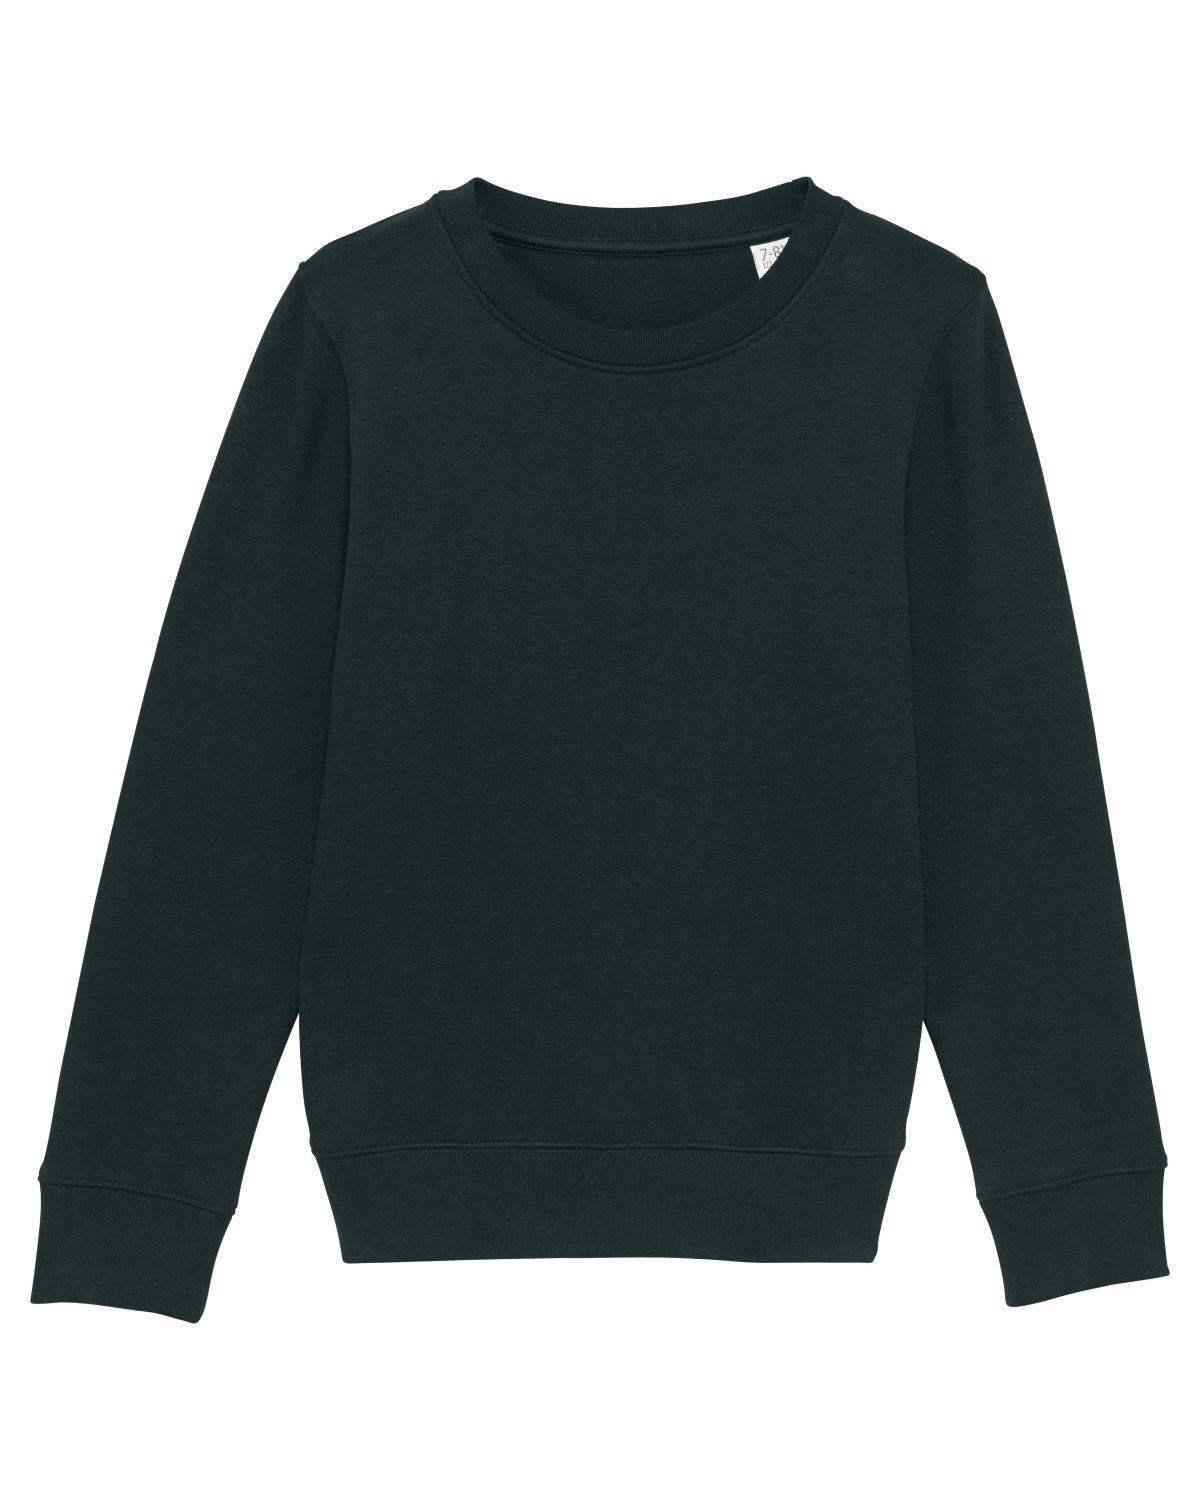 Stanley/Stella's - Mini Changer Sweater - Black